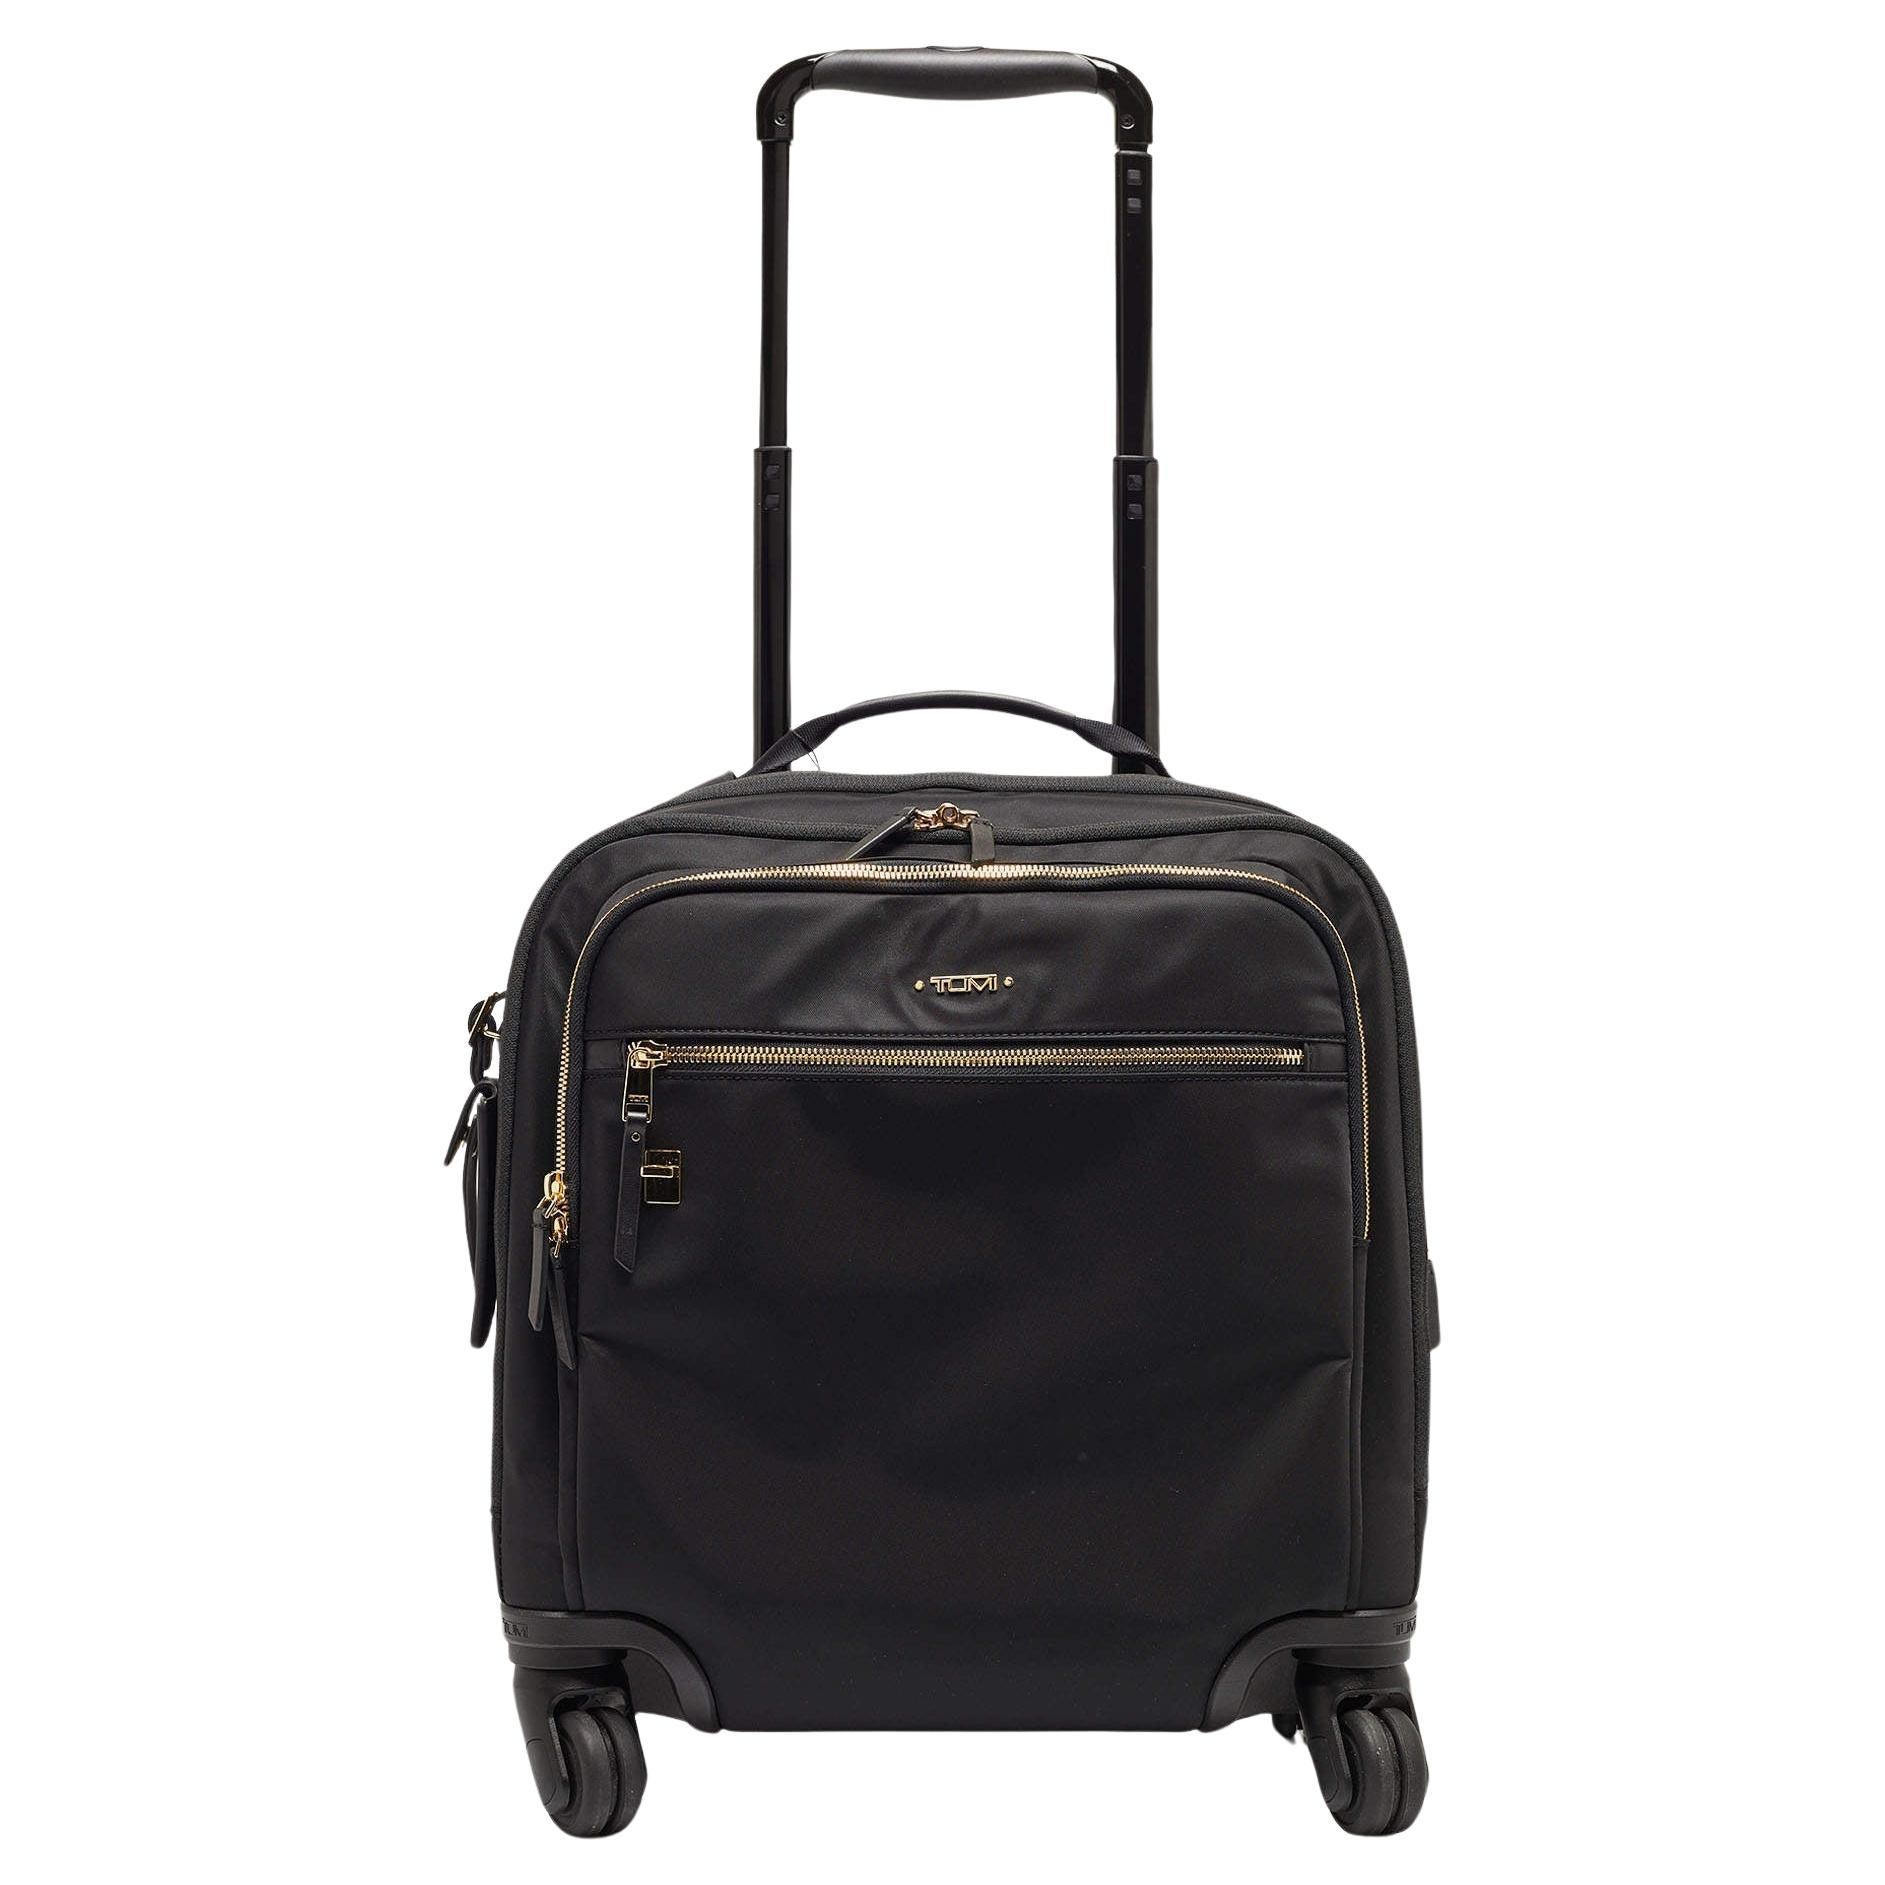 TUMI Black Nylon Compact Oxford Carry On Luggage